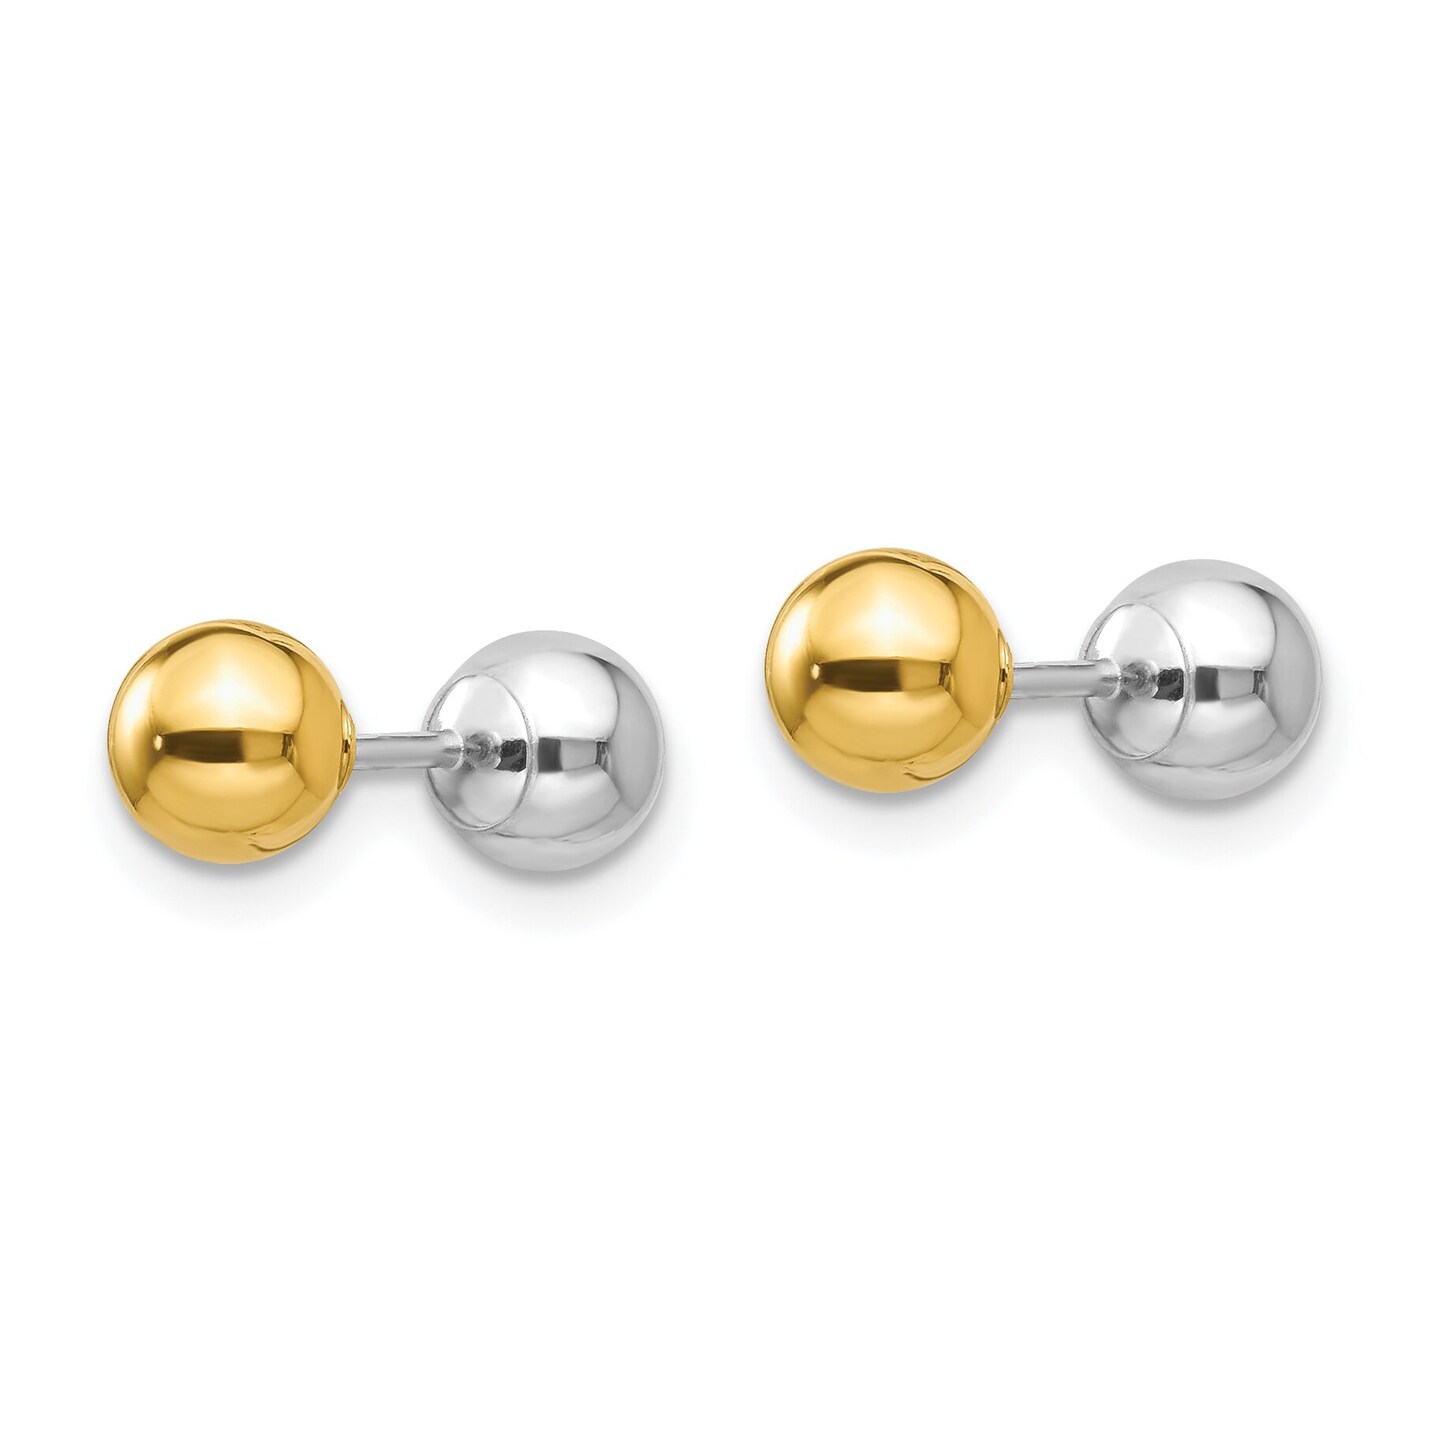 14K Two Tone Gold Reversible Ball Earrings Jewelry 14mm x 5mm